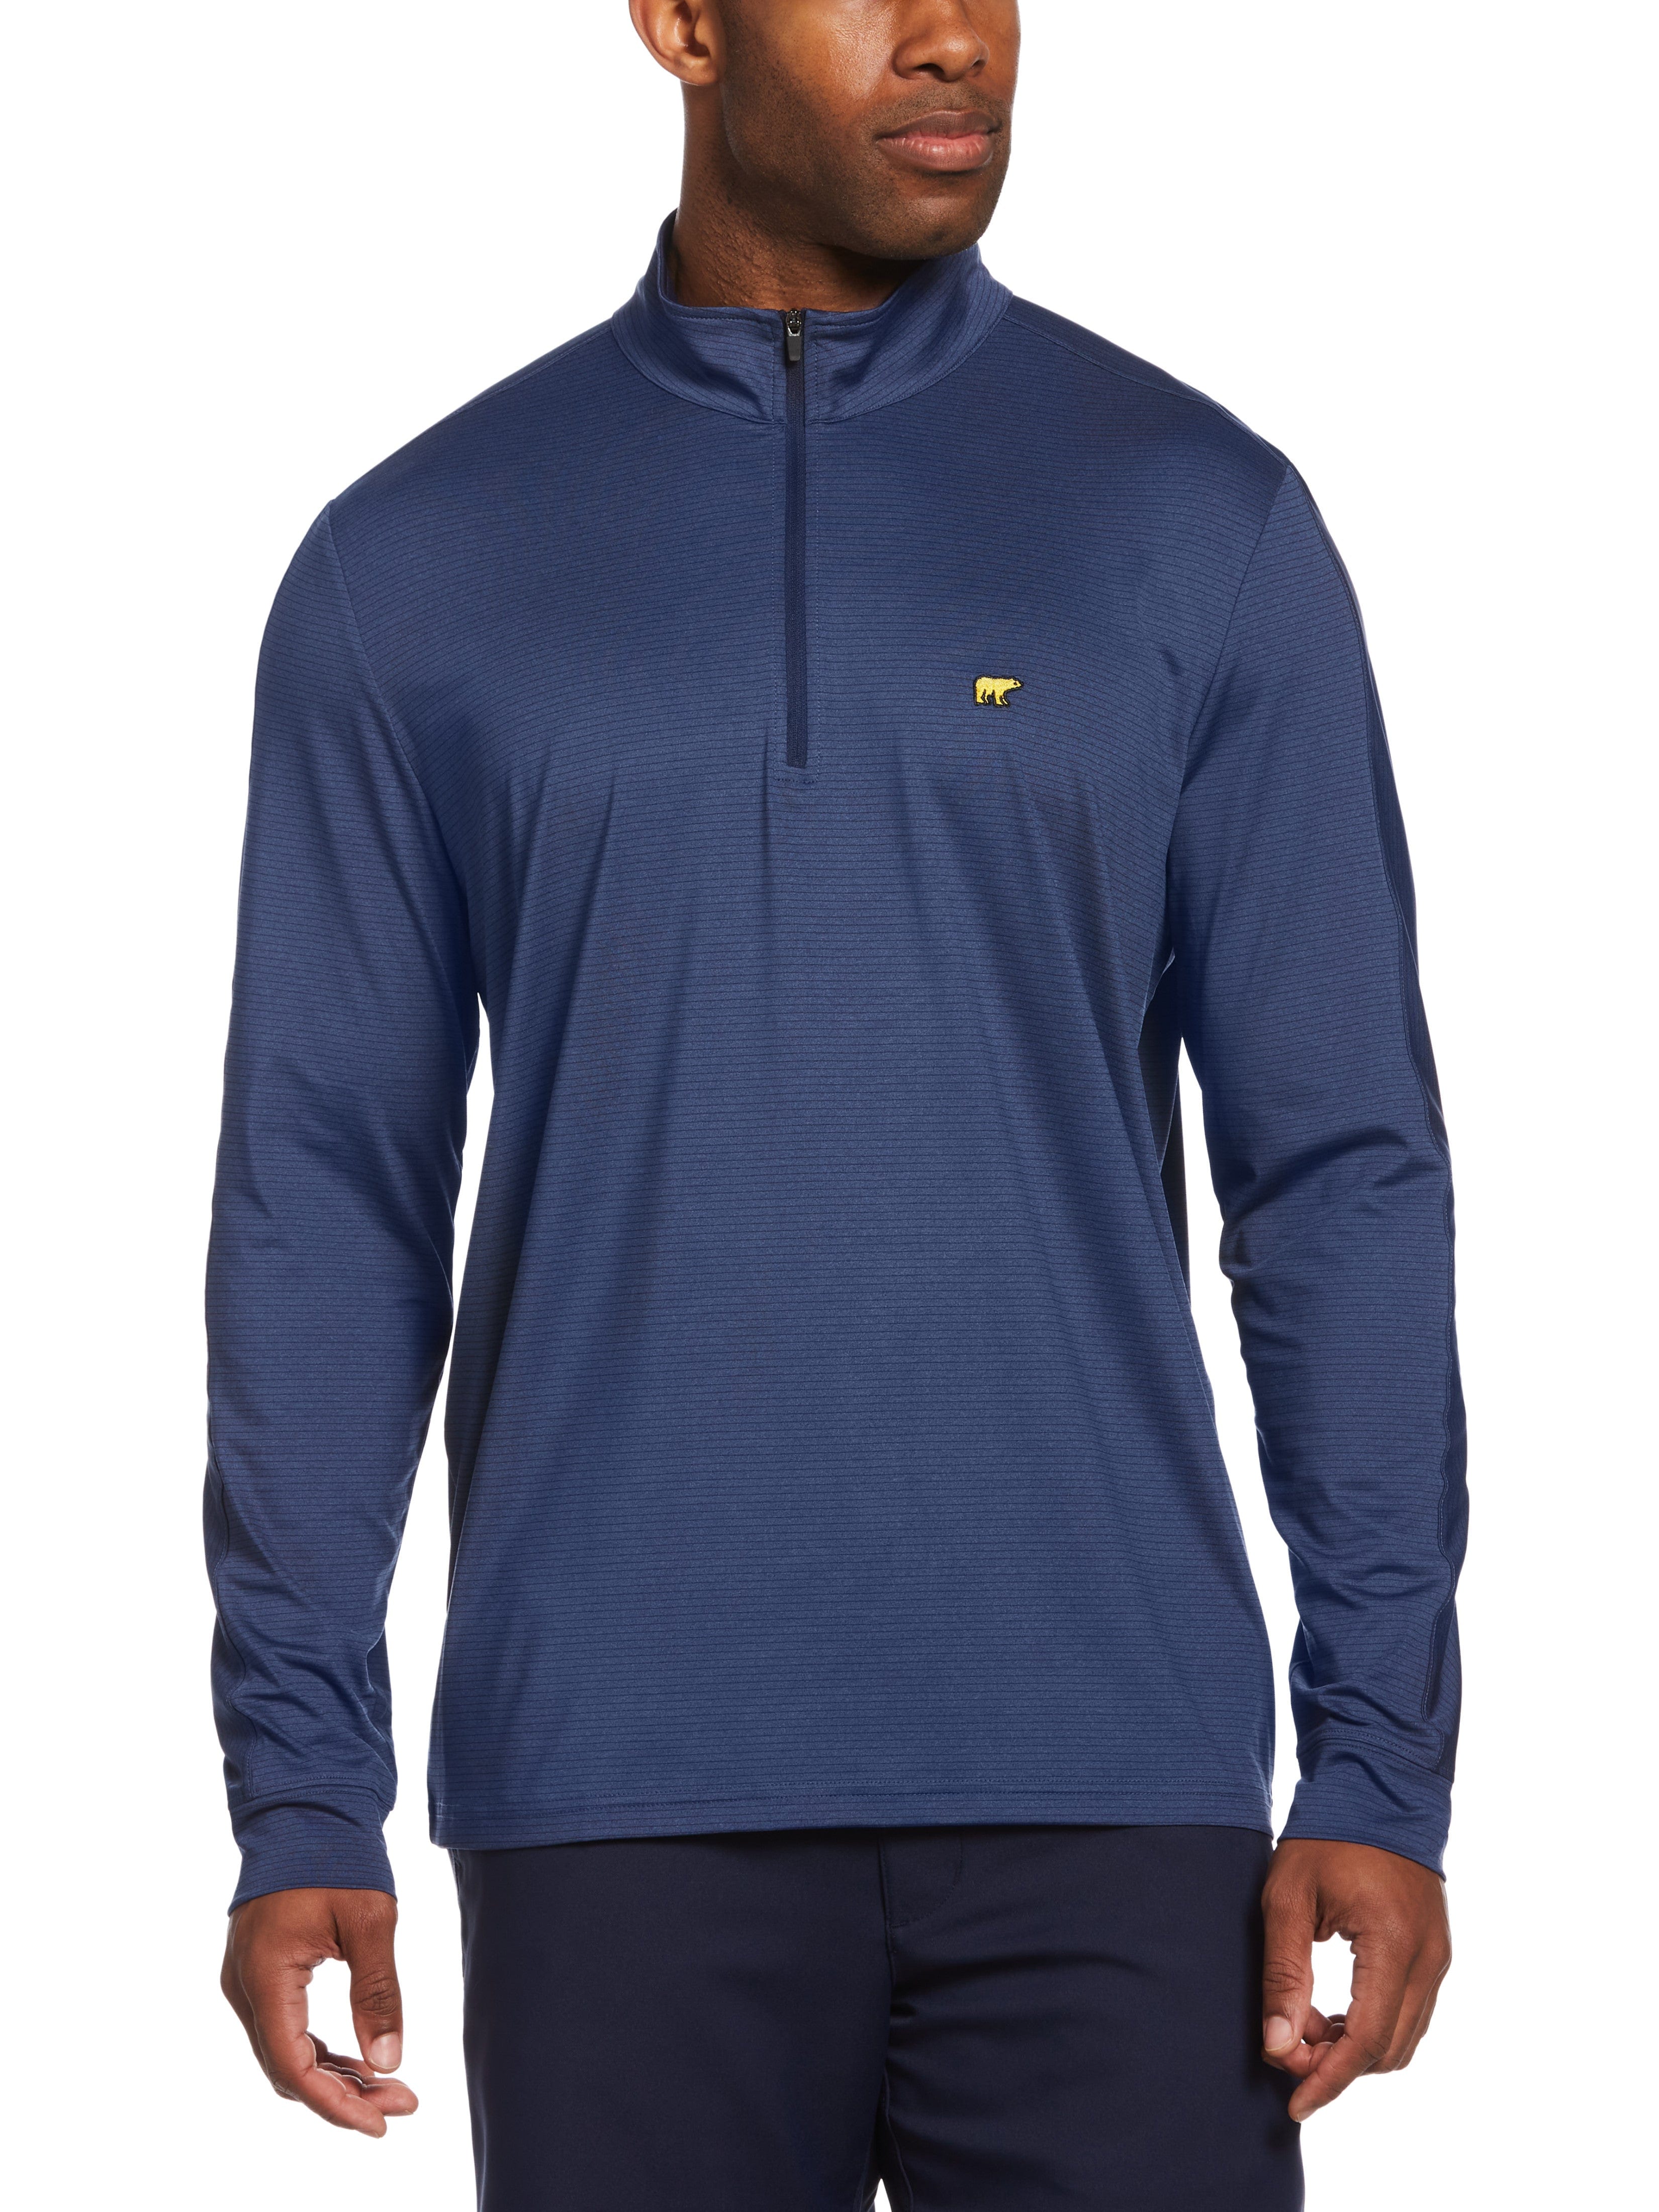 Jack Nicklaus Mens 1/4 Zip Sun Shade Base Layer Golf Shirt, Size 2XL, Peacoat Heather Brown, Polyester/Elastane | Golf Apparel Shop